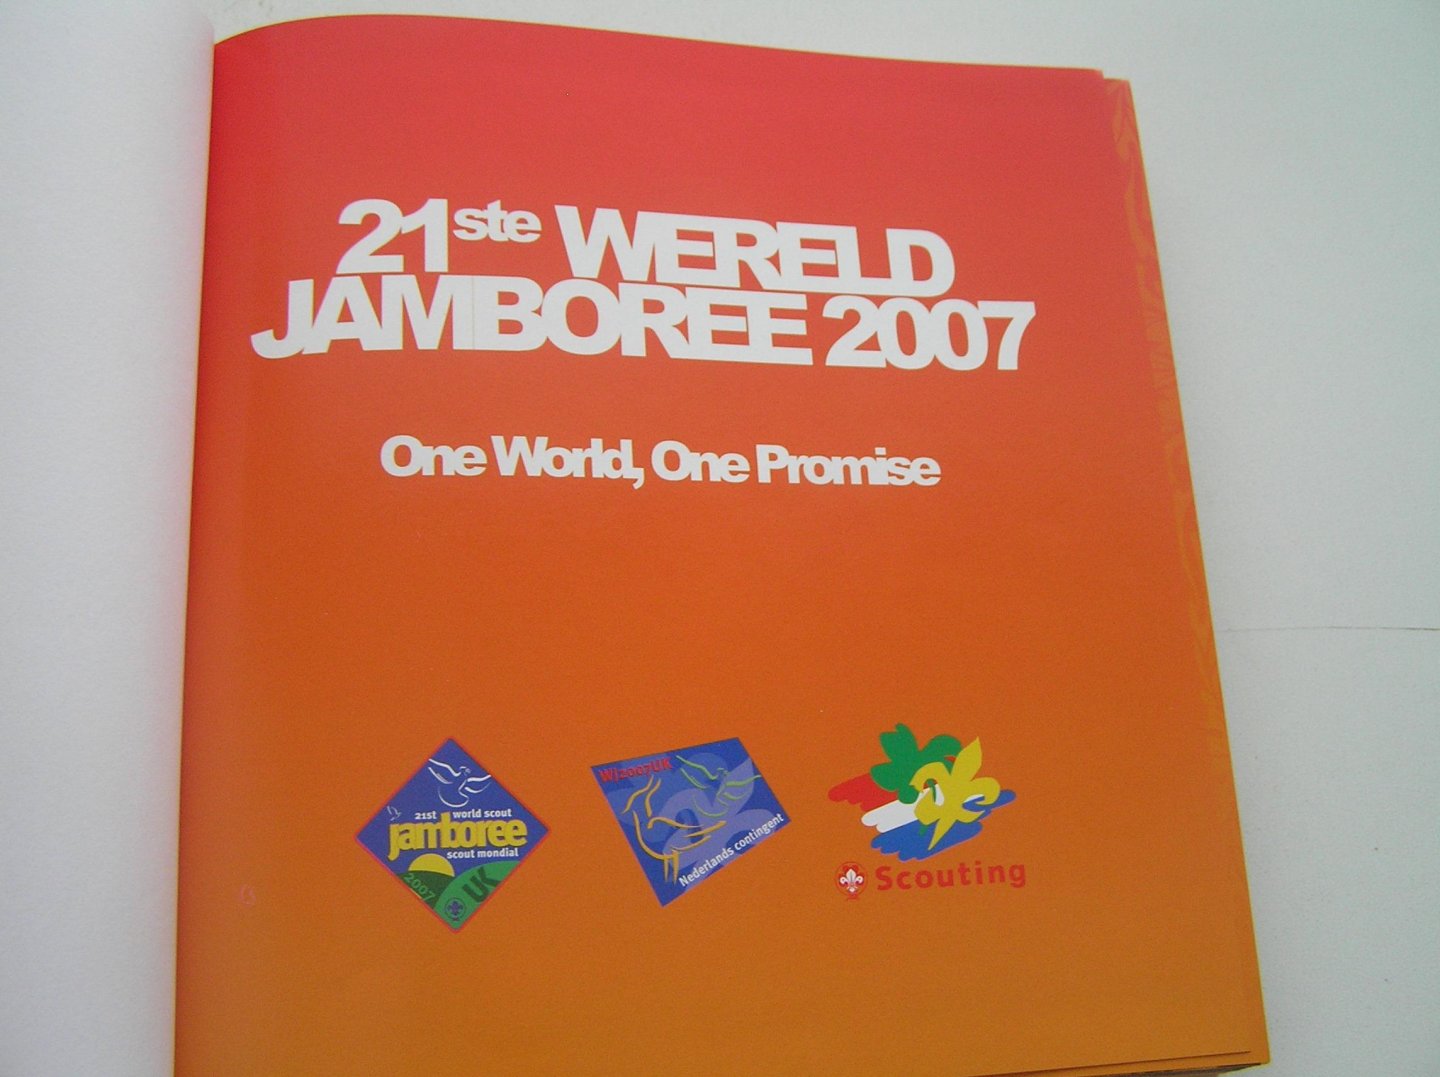 redactie - 21ste Wereld jamboree 2007  One World, One promise